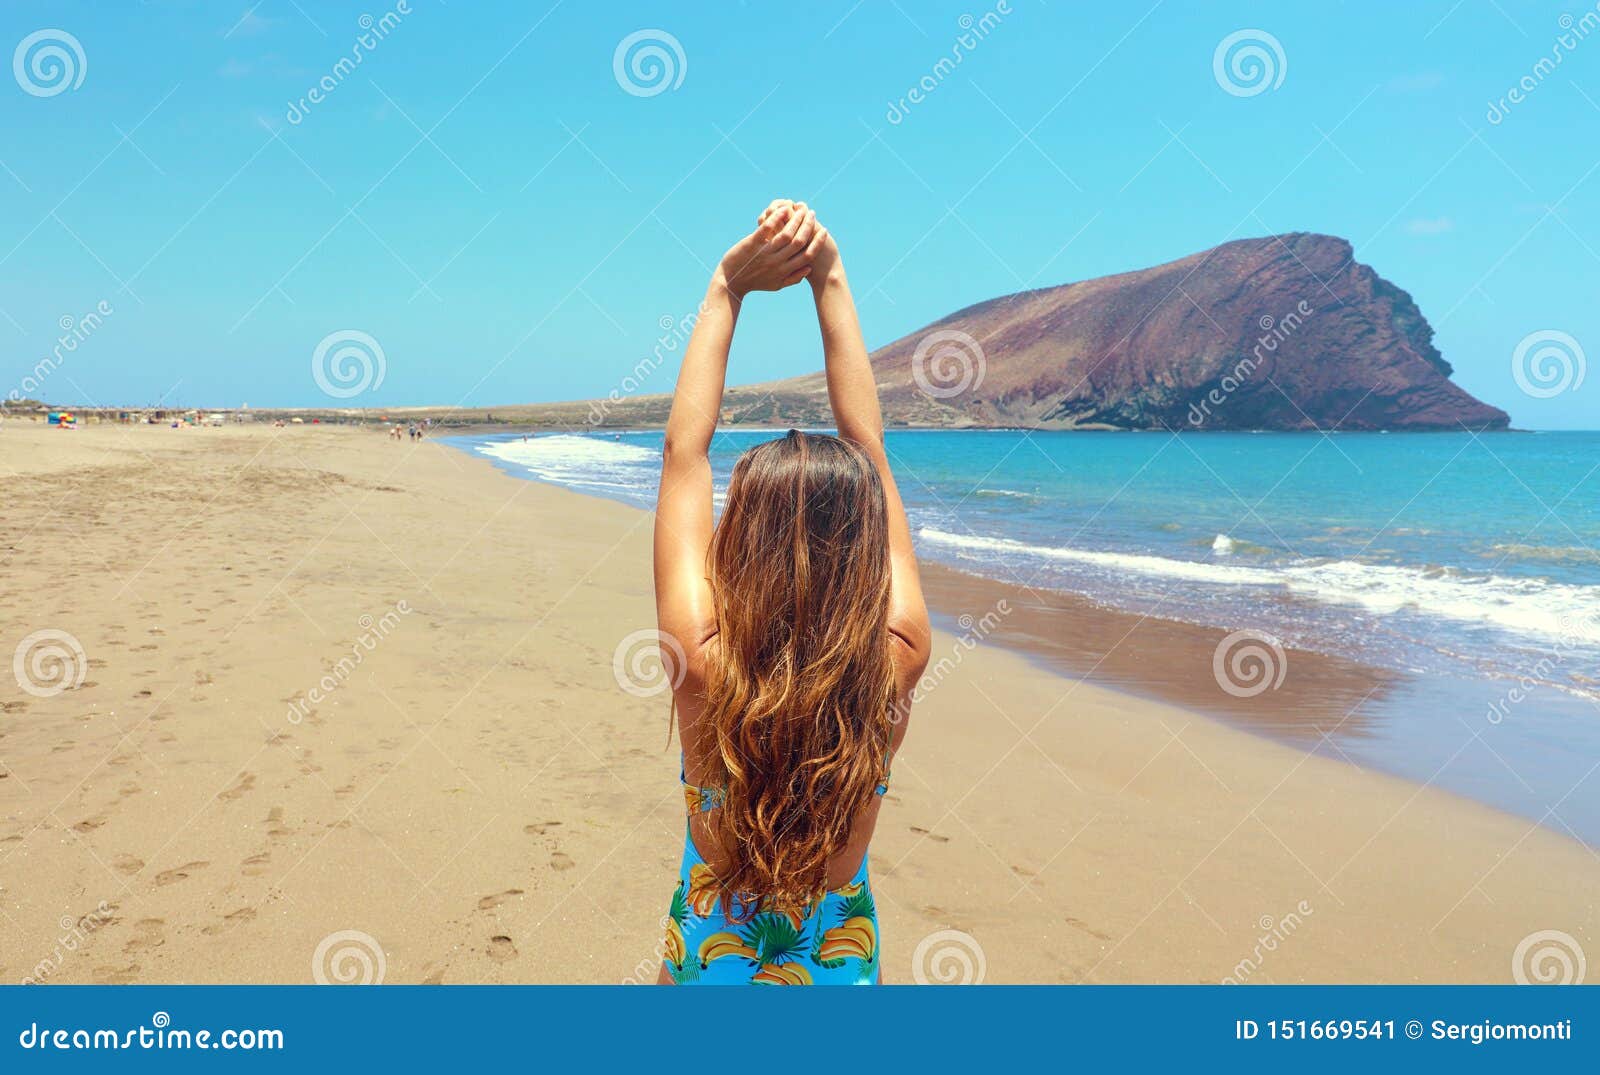 back view beautiful woman doing stretching exercises on the beach in playa la tejita, tenerife